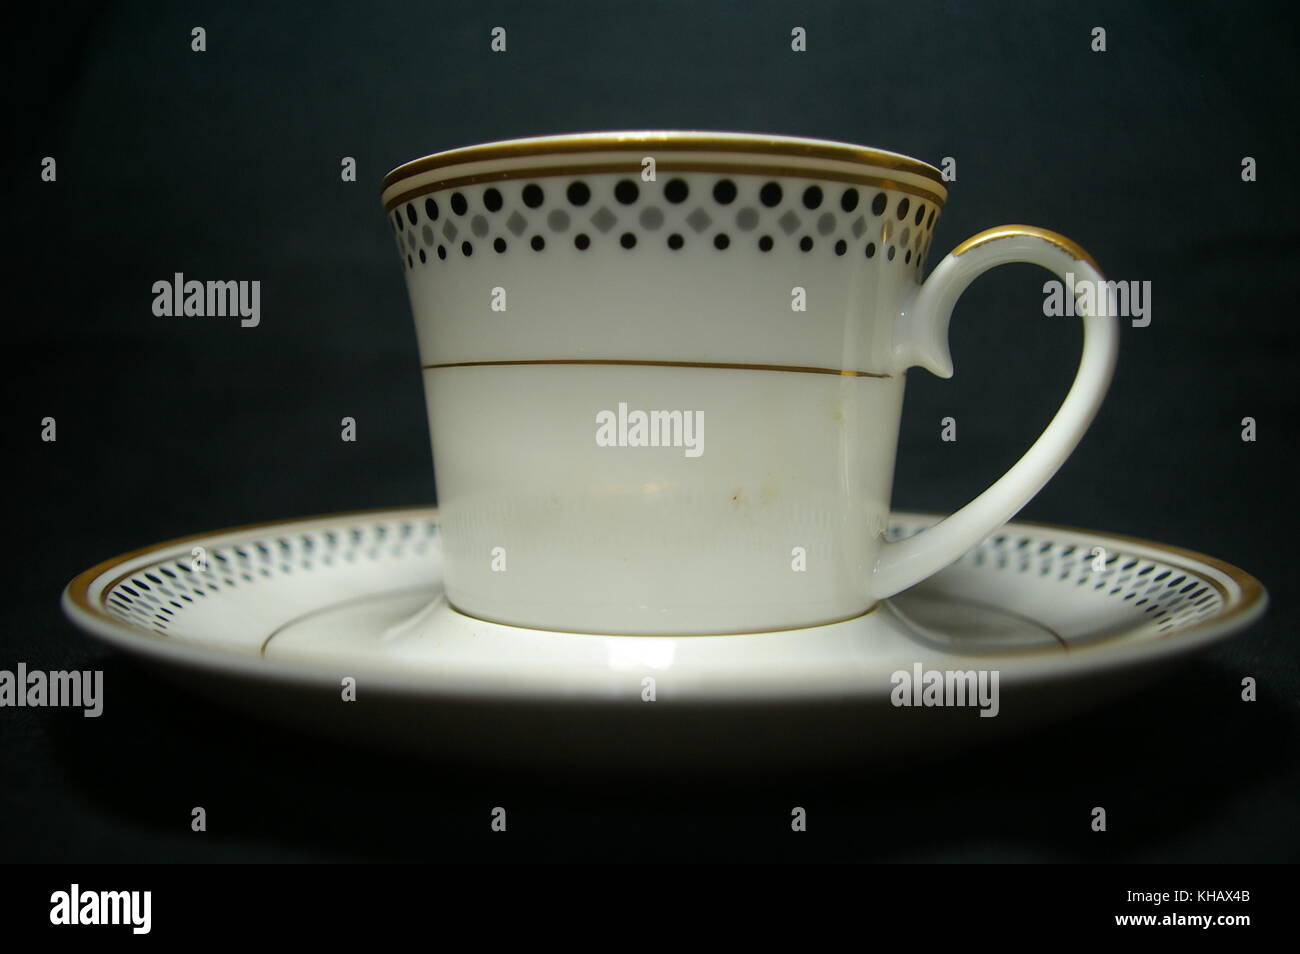 Tea cup on black backgroud Stock Photo